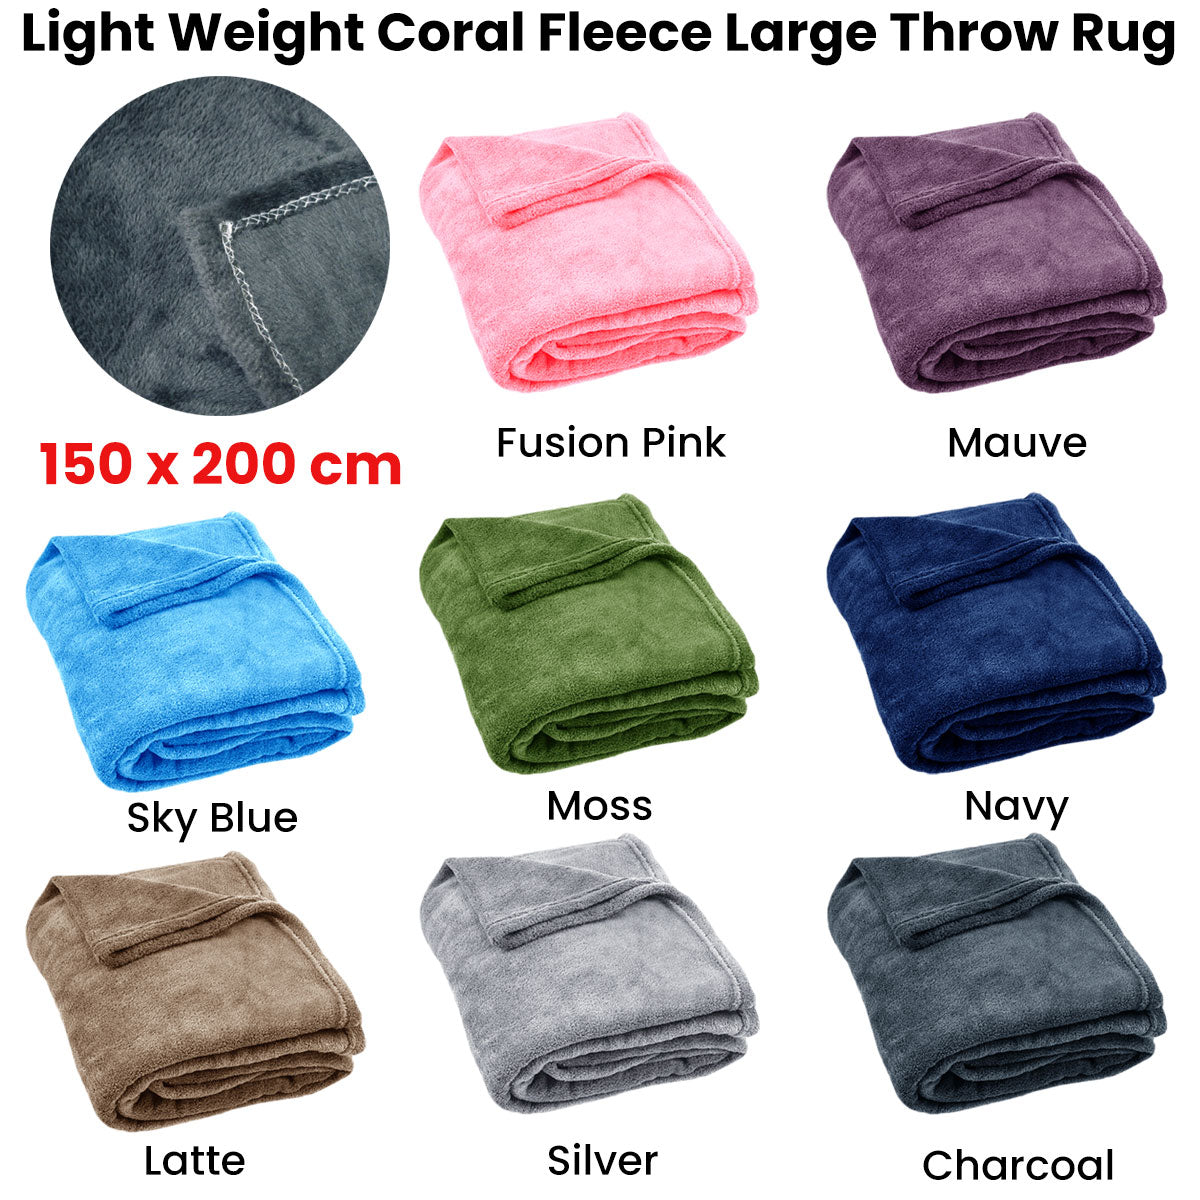 Light Weight Coral Fleece Throw Rug 150x200 cm Charcoal